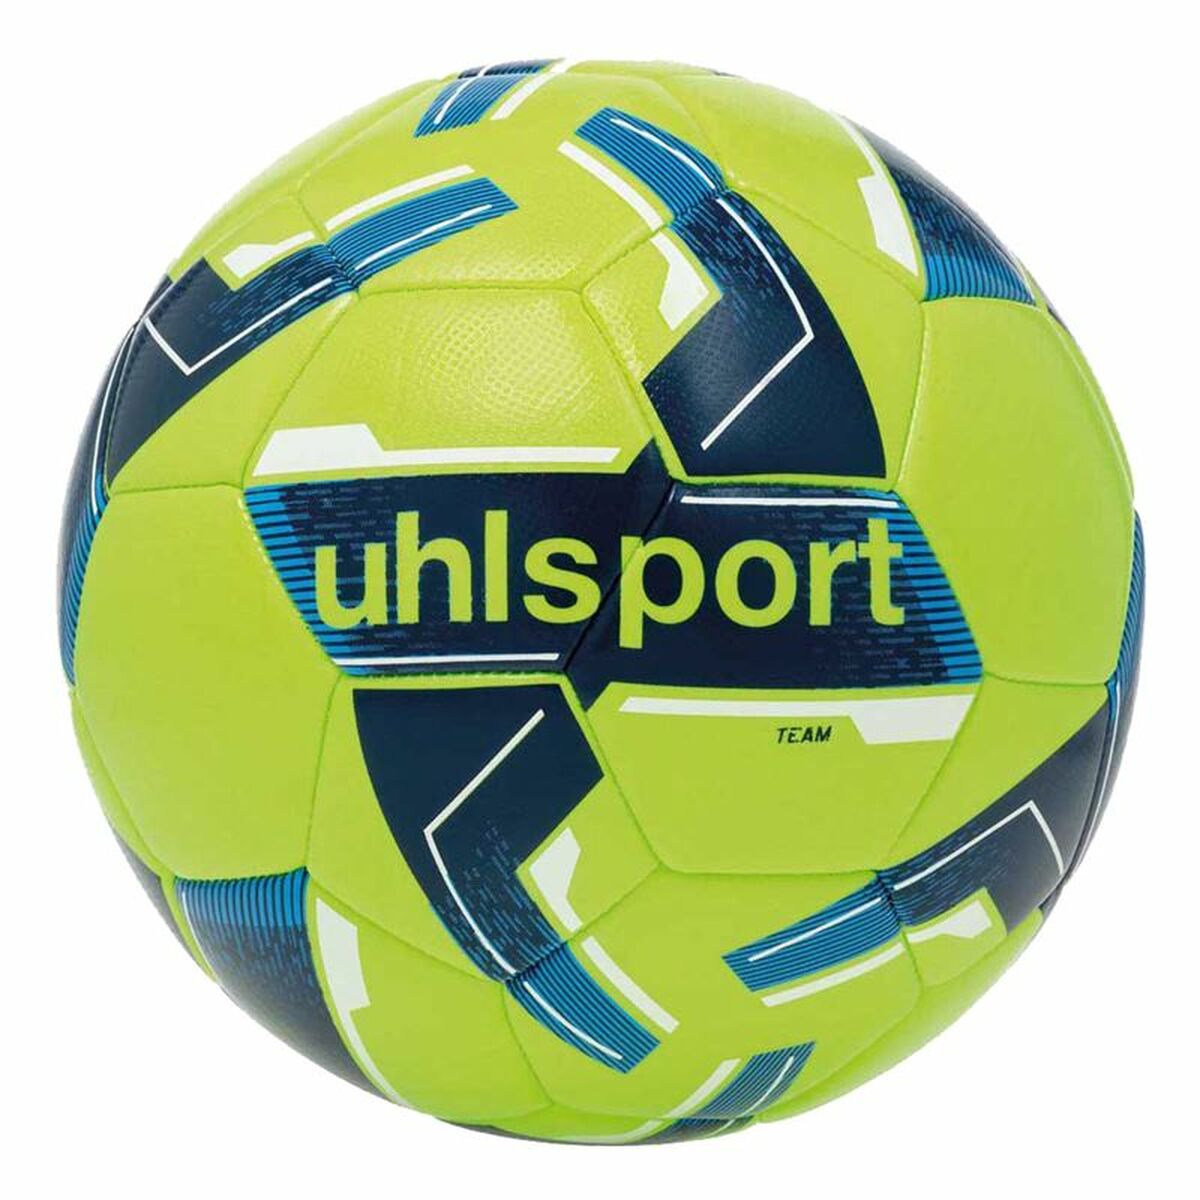 Ballon de Football Uhlsport Team Mini Jaune Taille unique